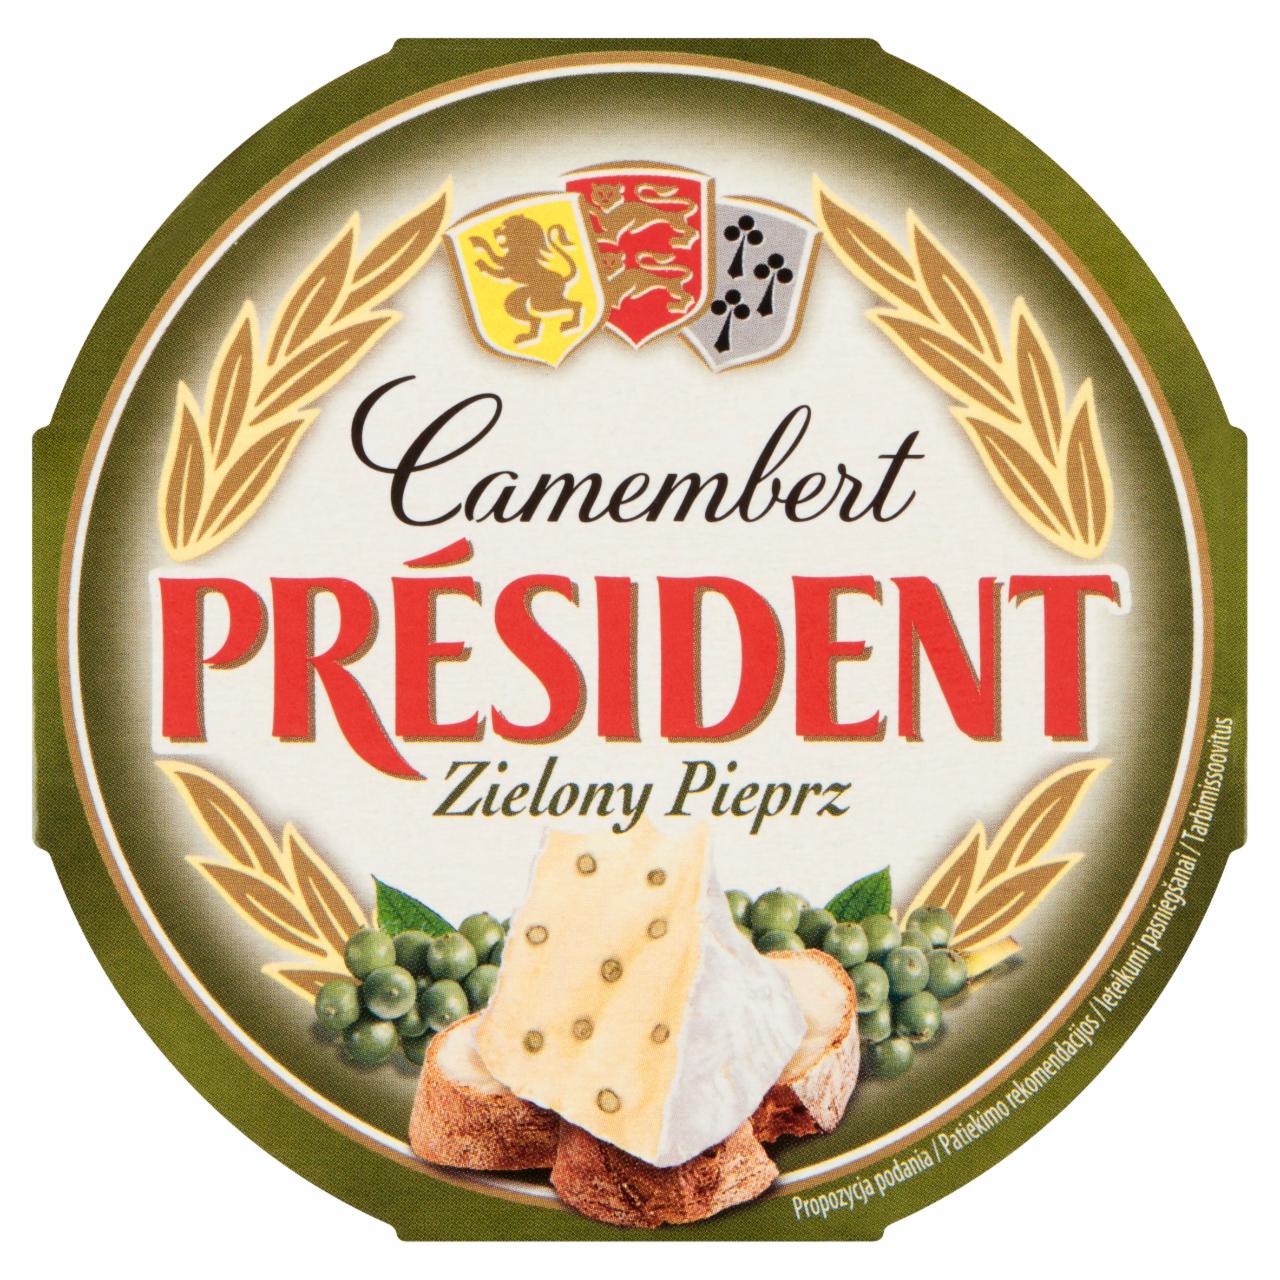 Zdjęcia - Président Ser Camembert zielony pieprz 120 g